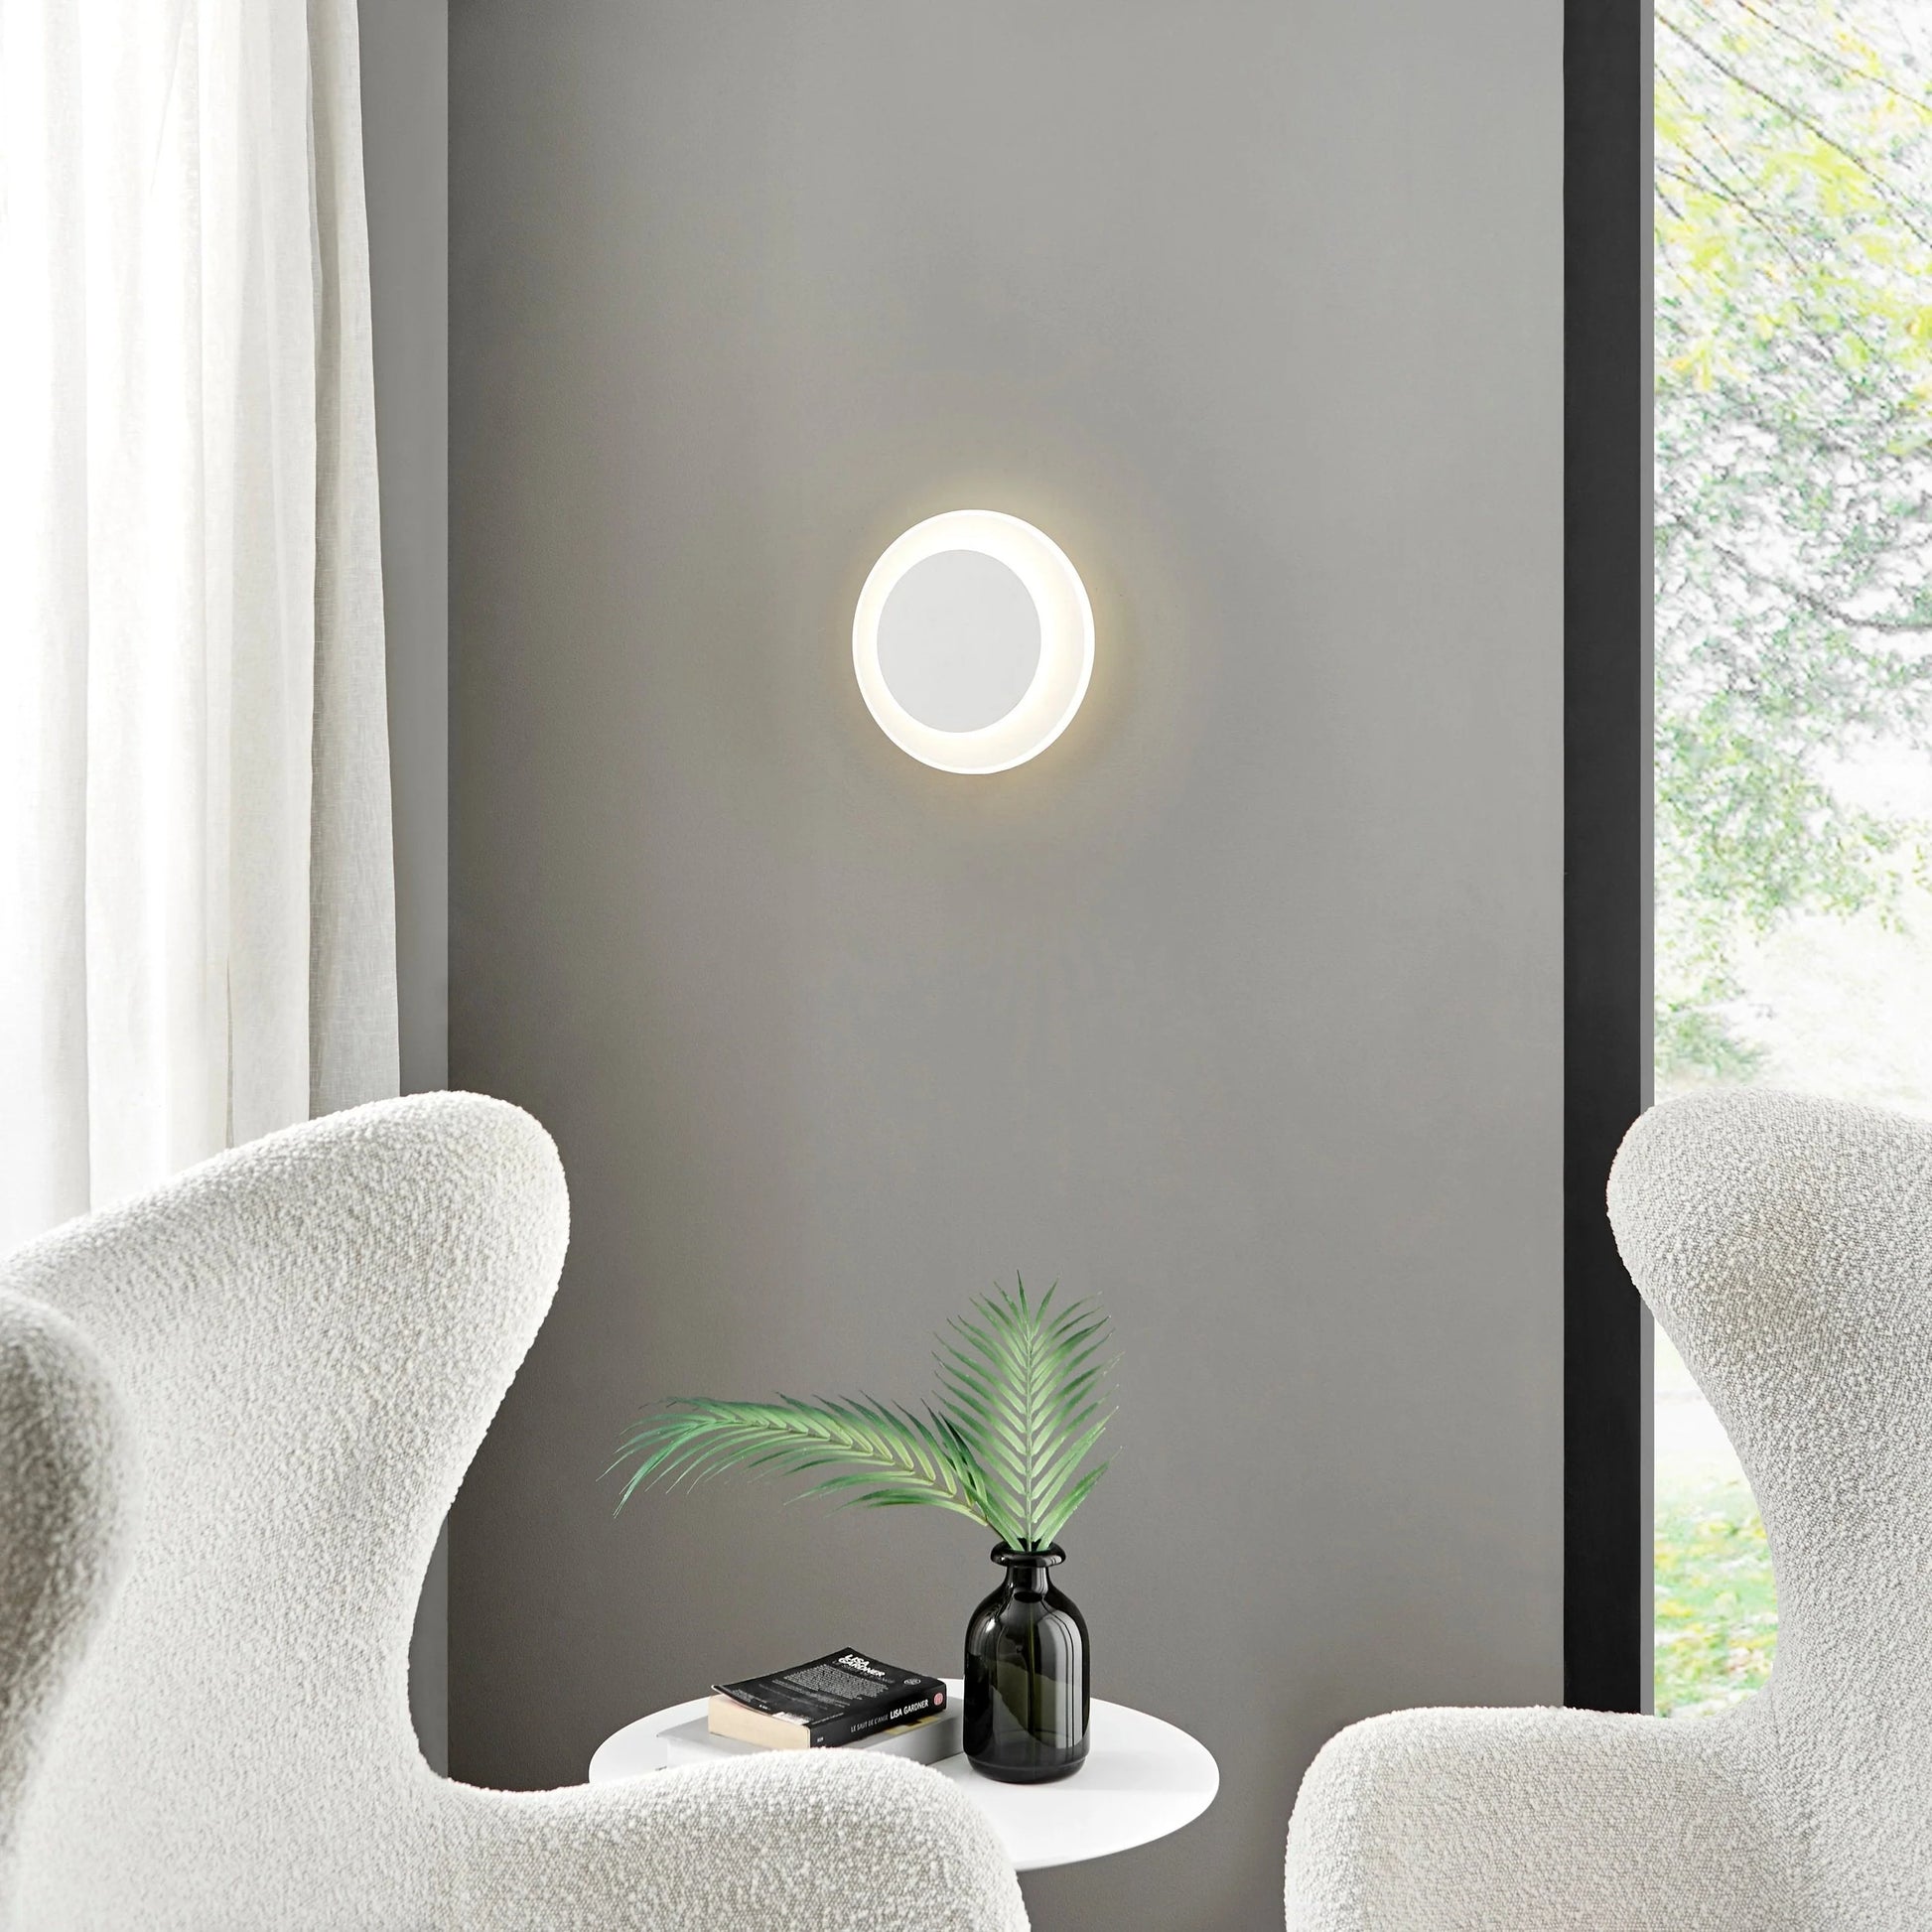  Luna Eclipse Two Circle Wall/Ceiling Light Matte White - Smart Light 2